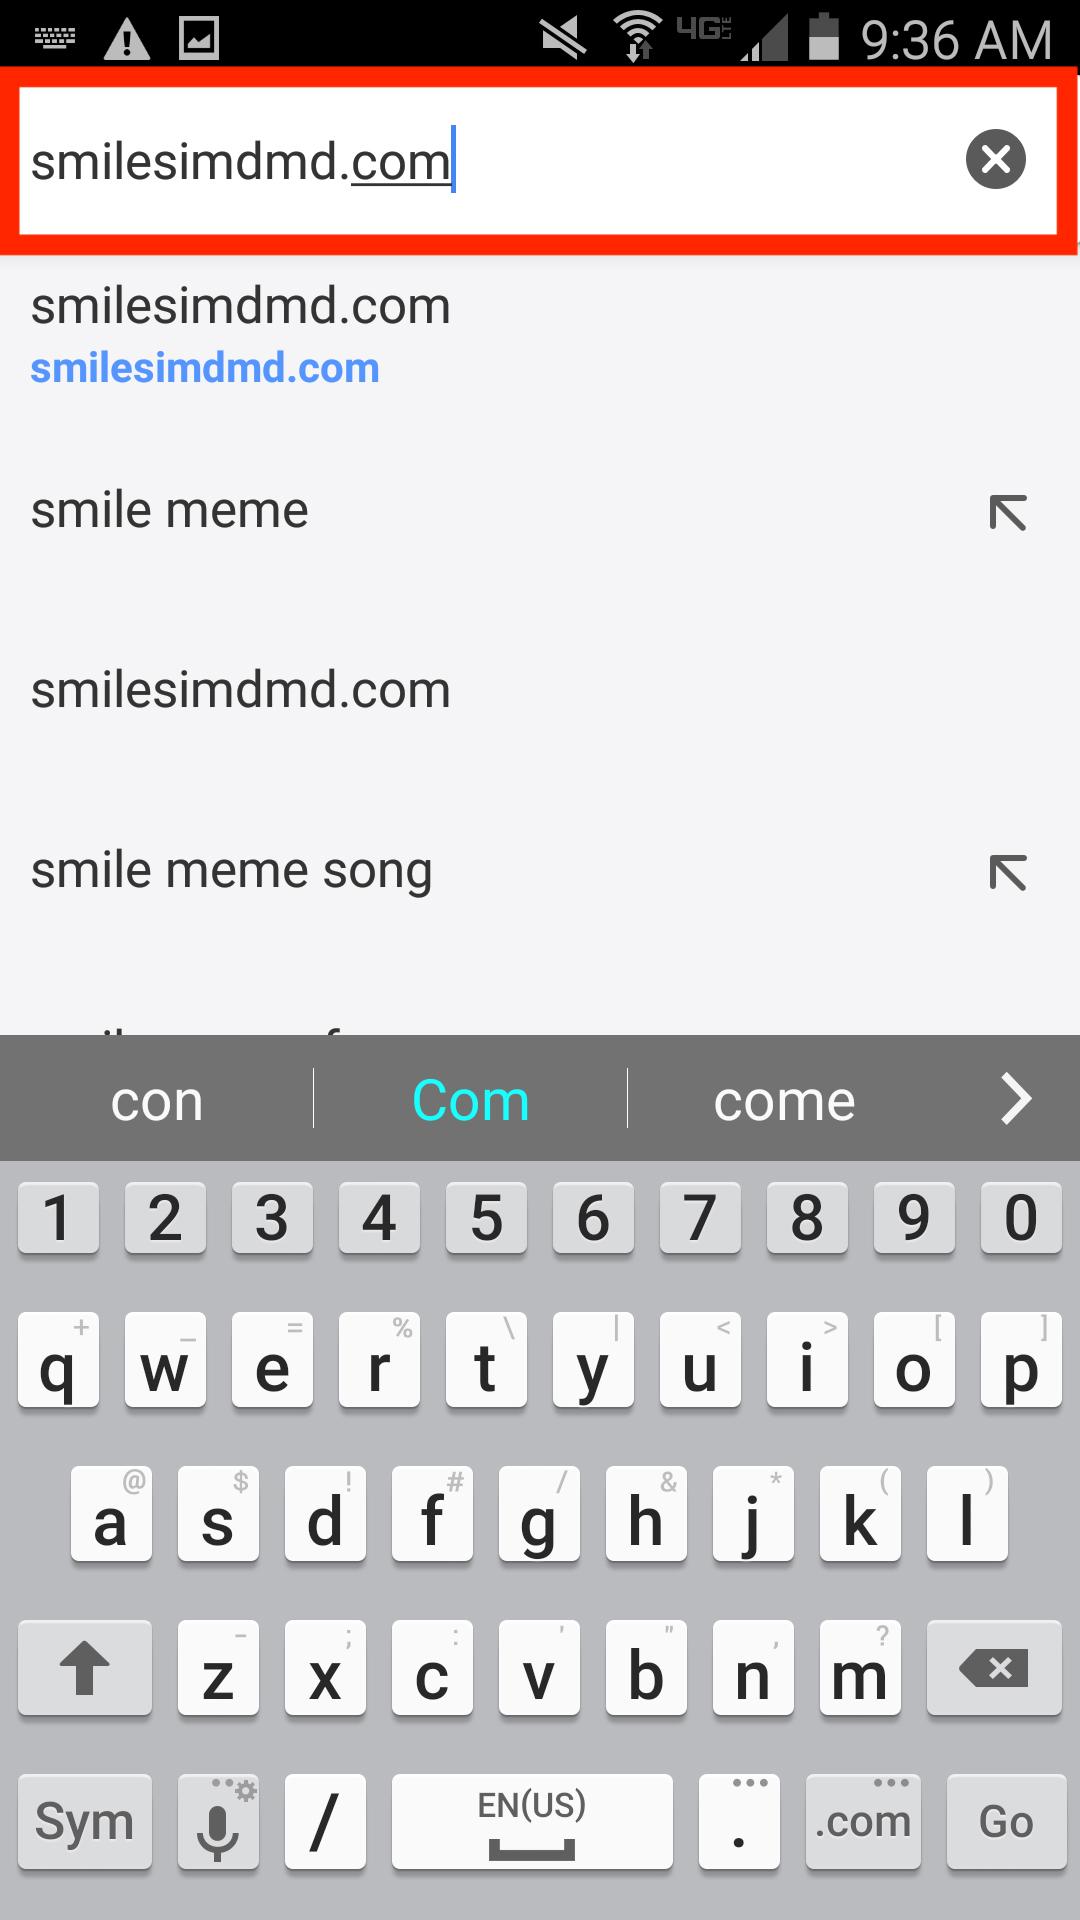 Enter smilesimdmd.com in the URL bar.